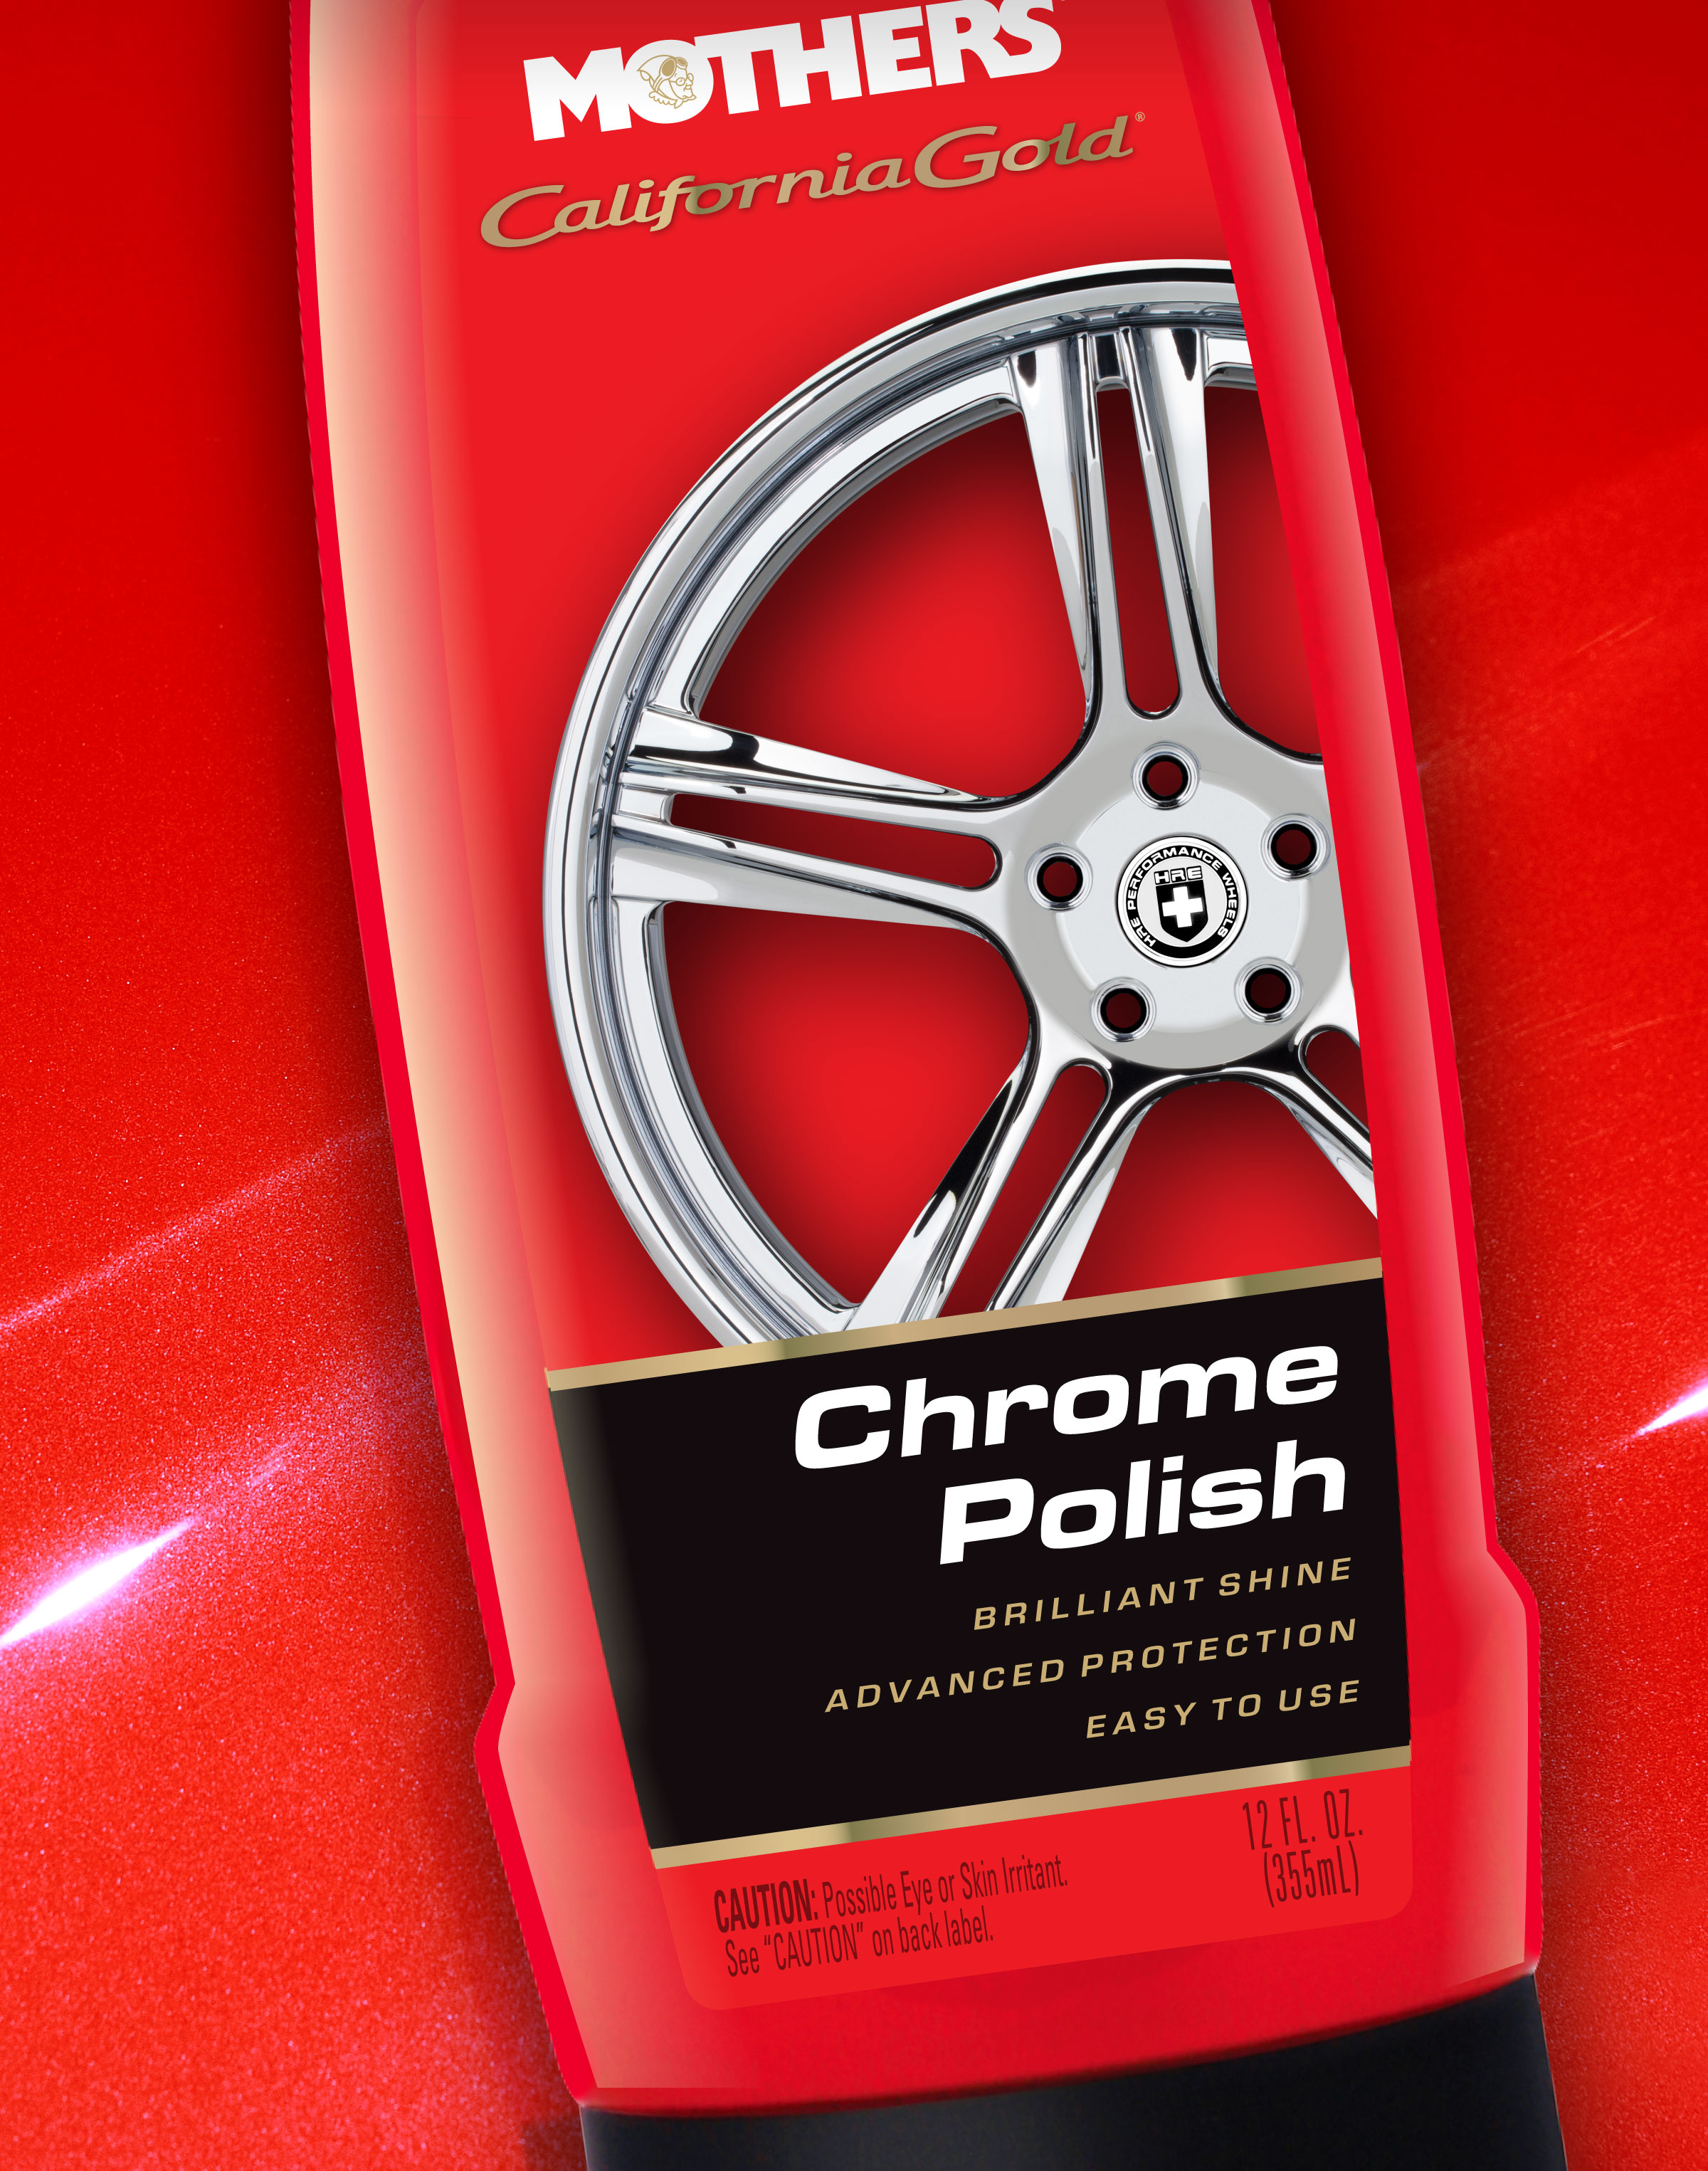 California Gold® Chrome Polish